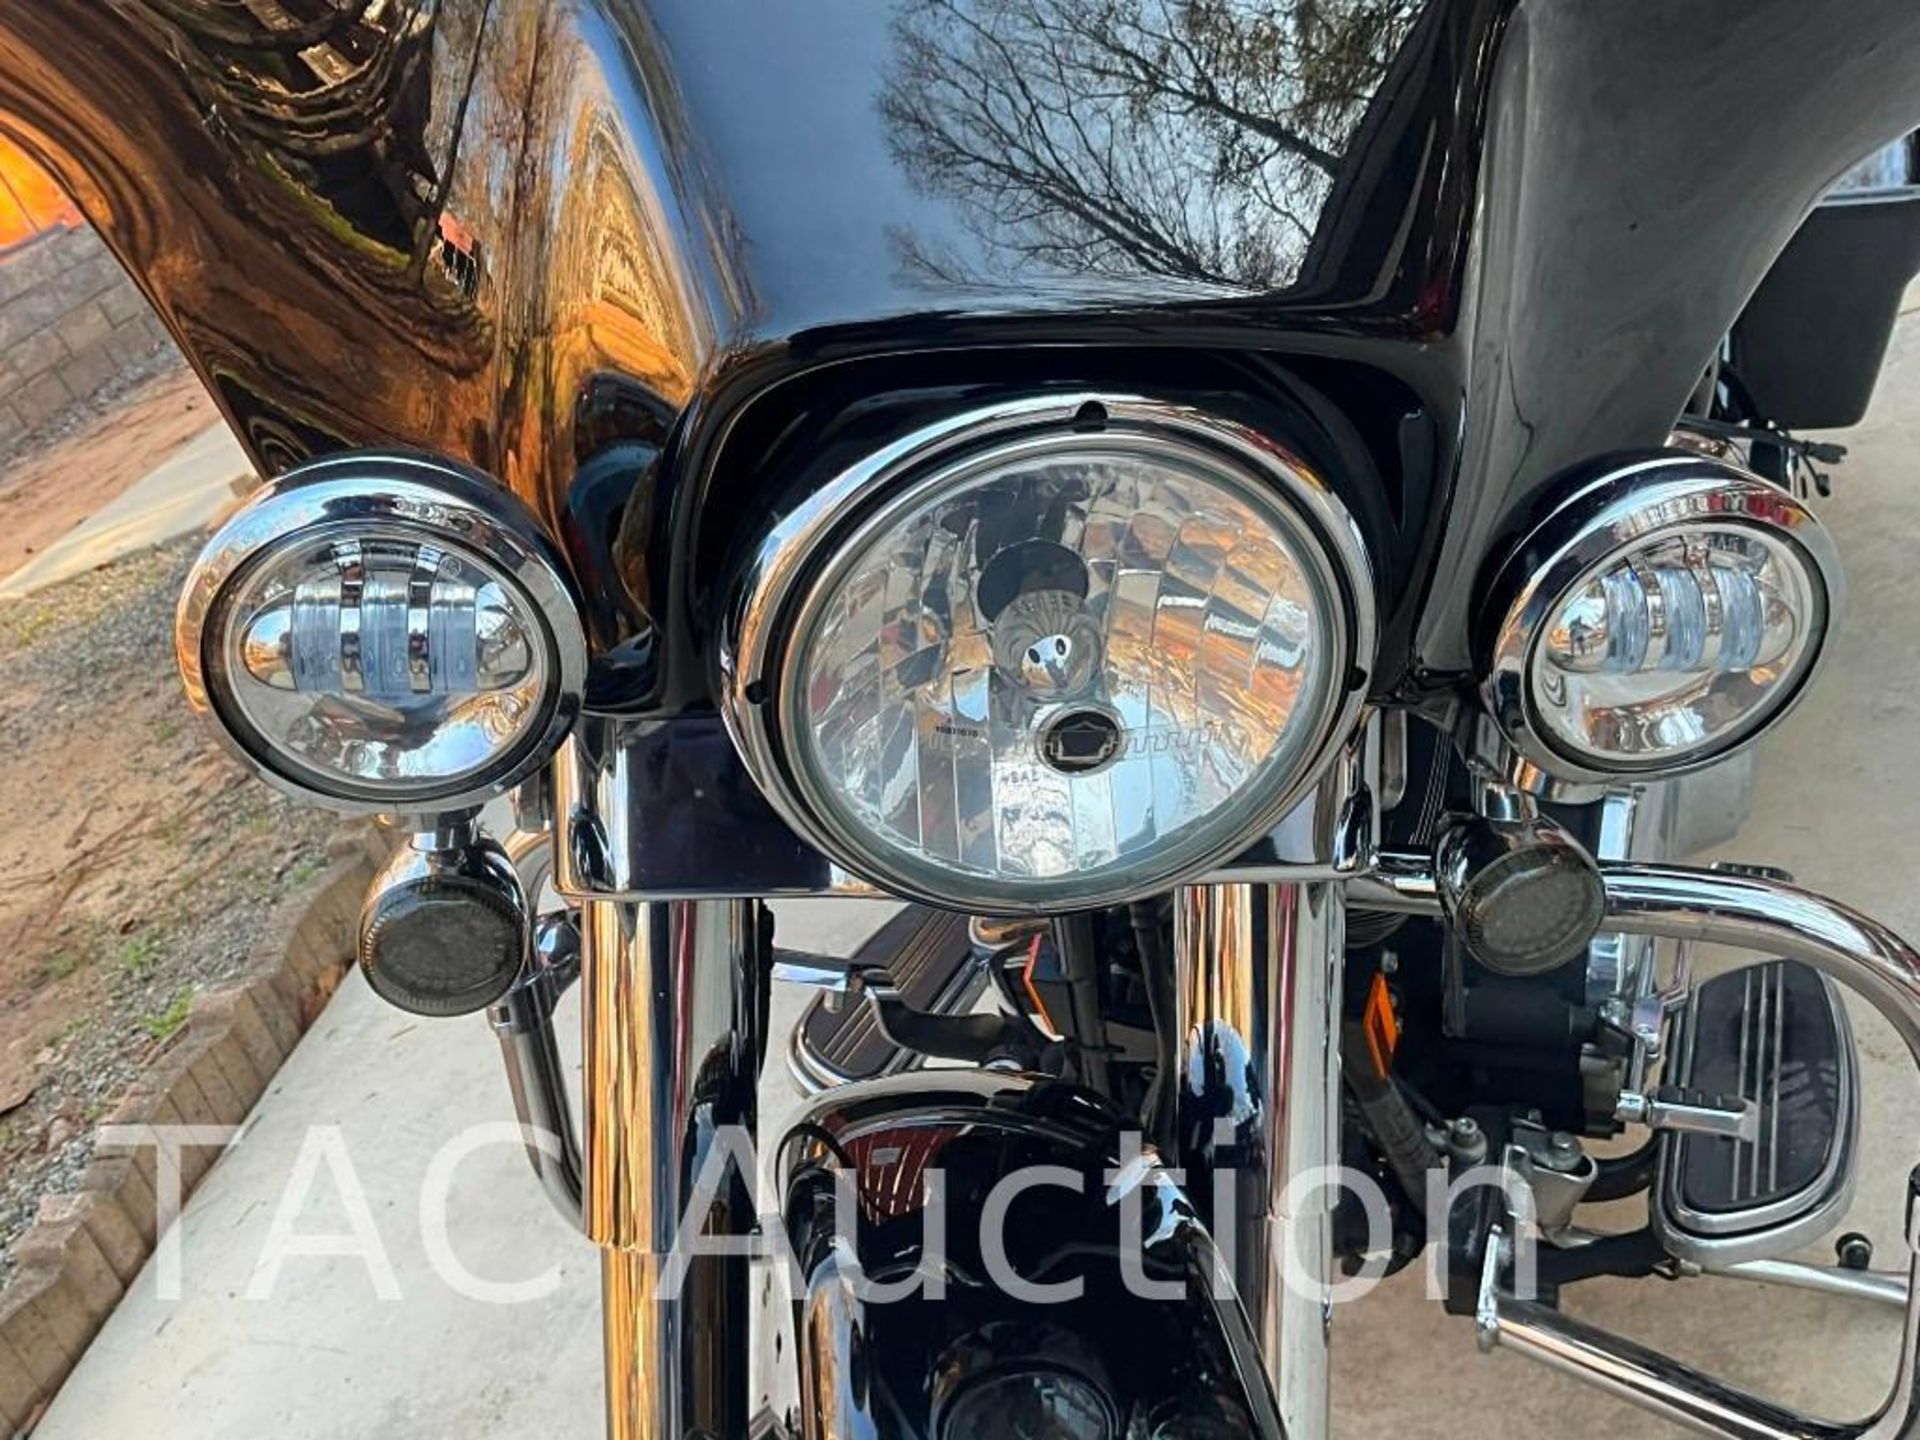 2007 Harley Davidson Street Glide Motorcycle - Image 12 of 36